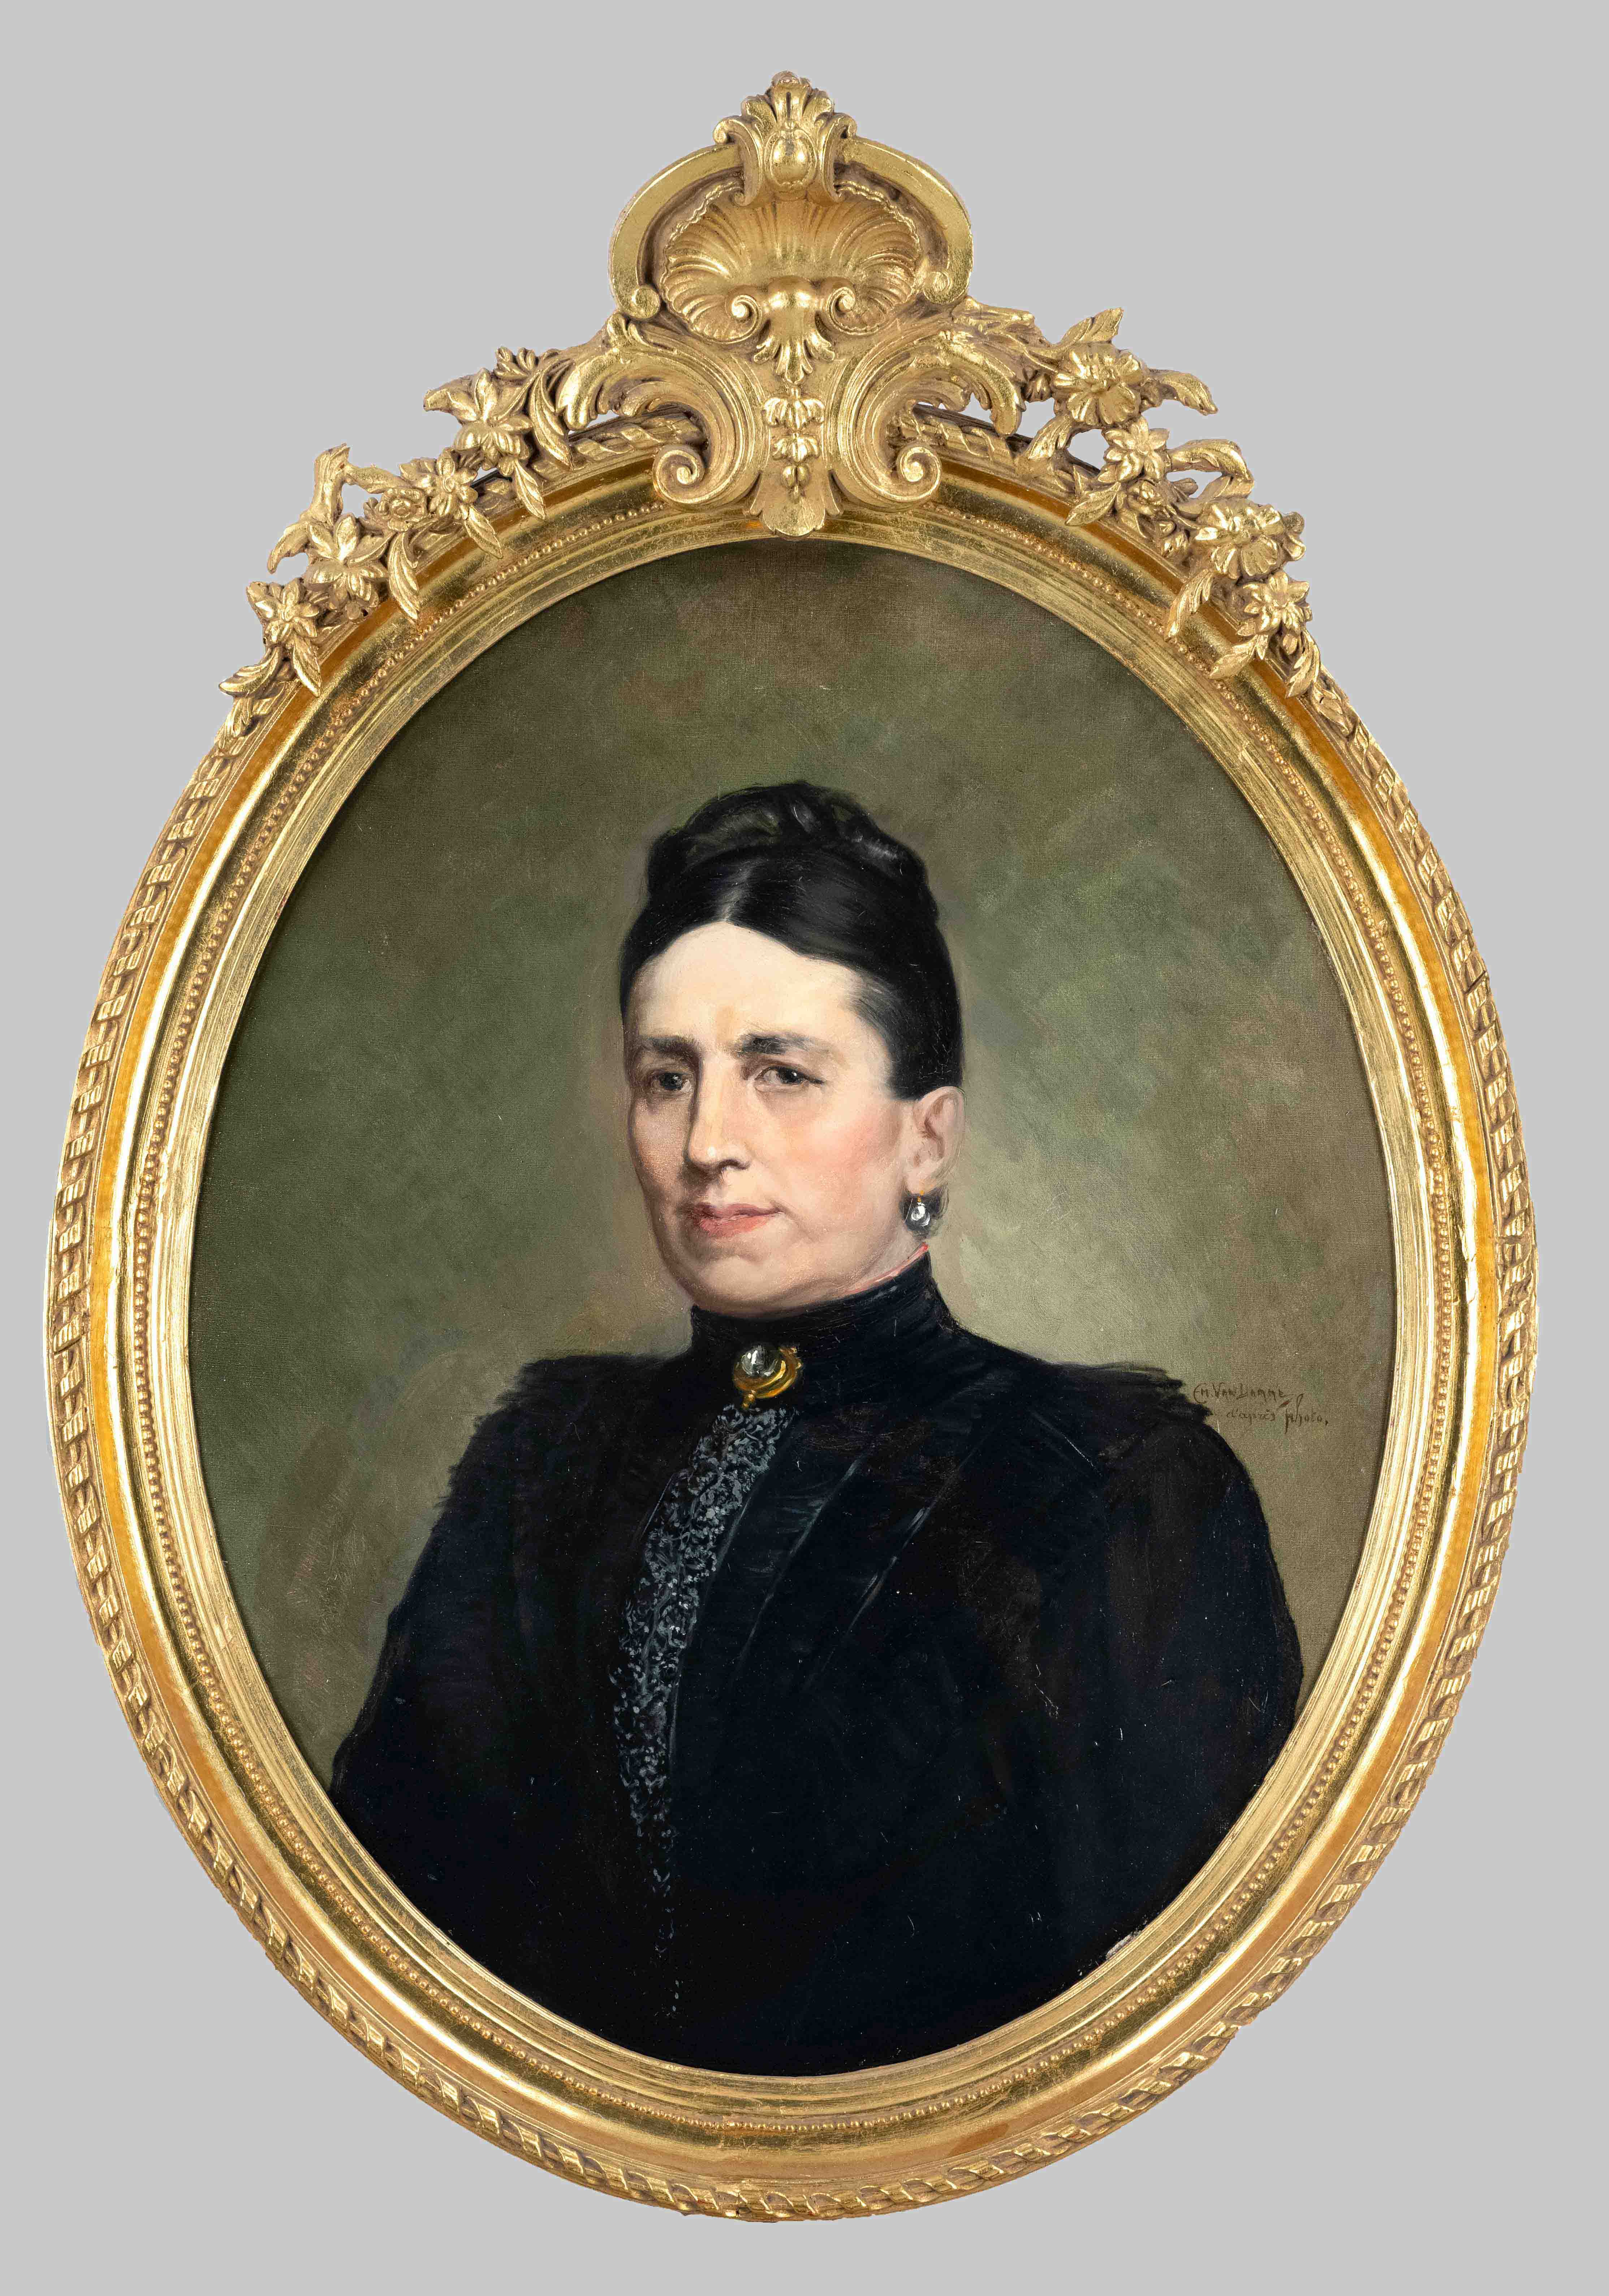 Em. van Damme, 19th century portrait painter, Portrait of a Lady in Black, oval bust in oil on